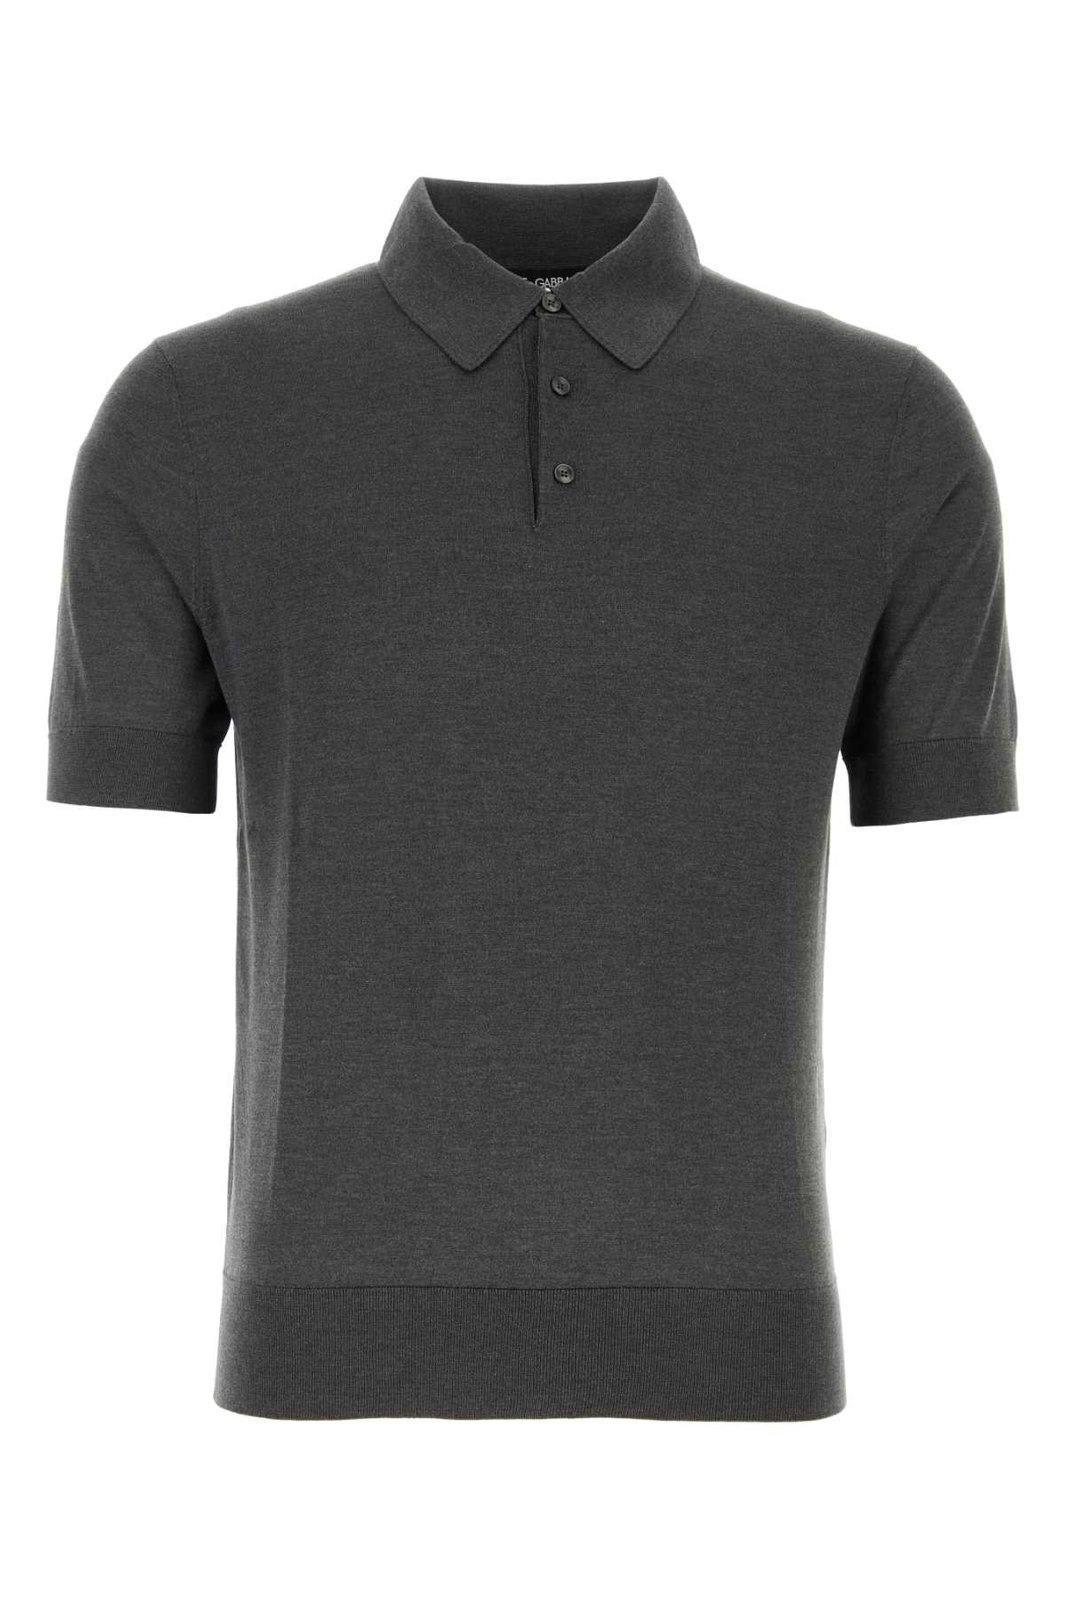 Dolce & Gabbana Short Sleeved Polo Shirt In Gray